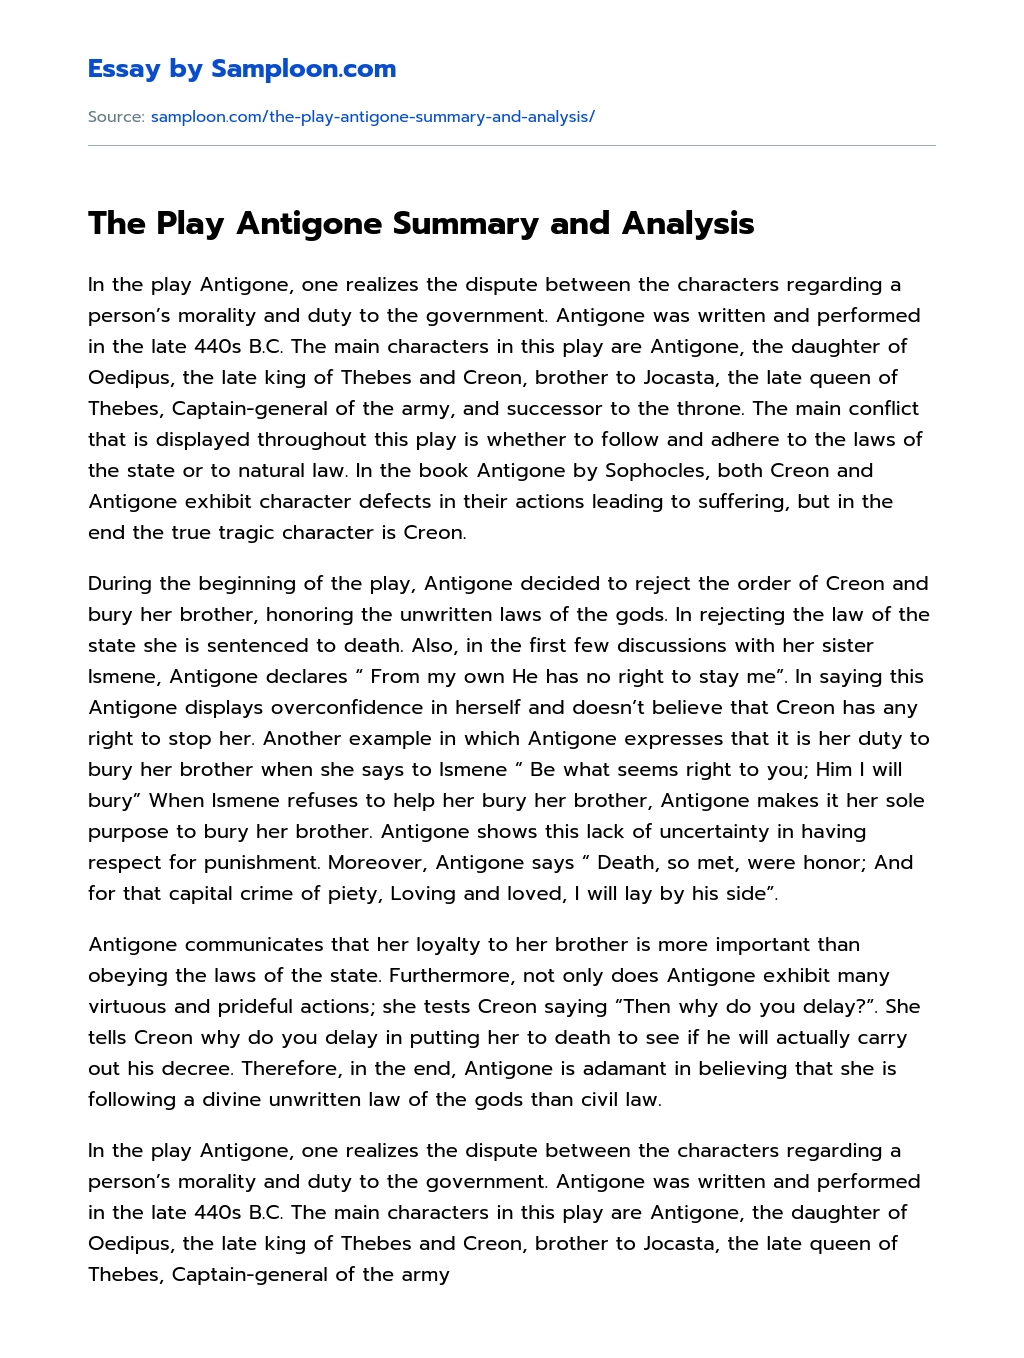 The Play Antigone Summary and Analysis essay